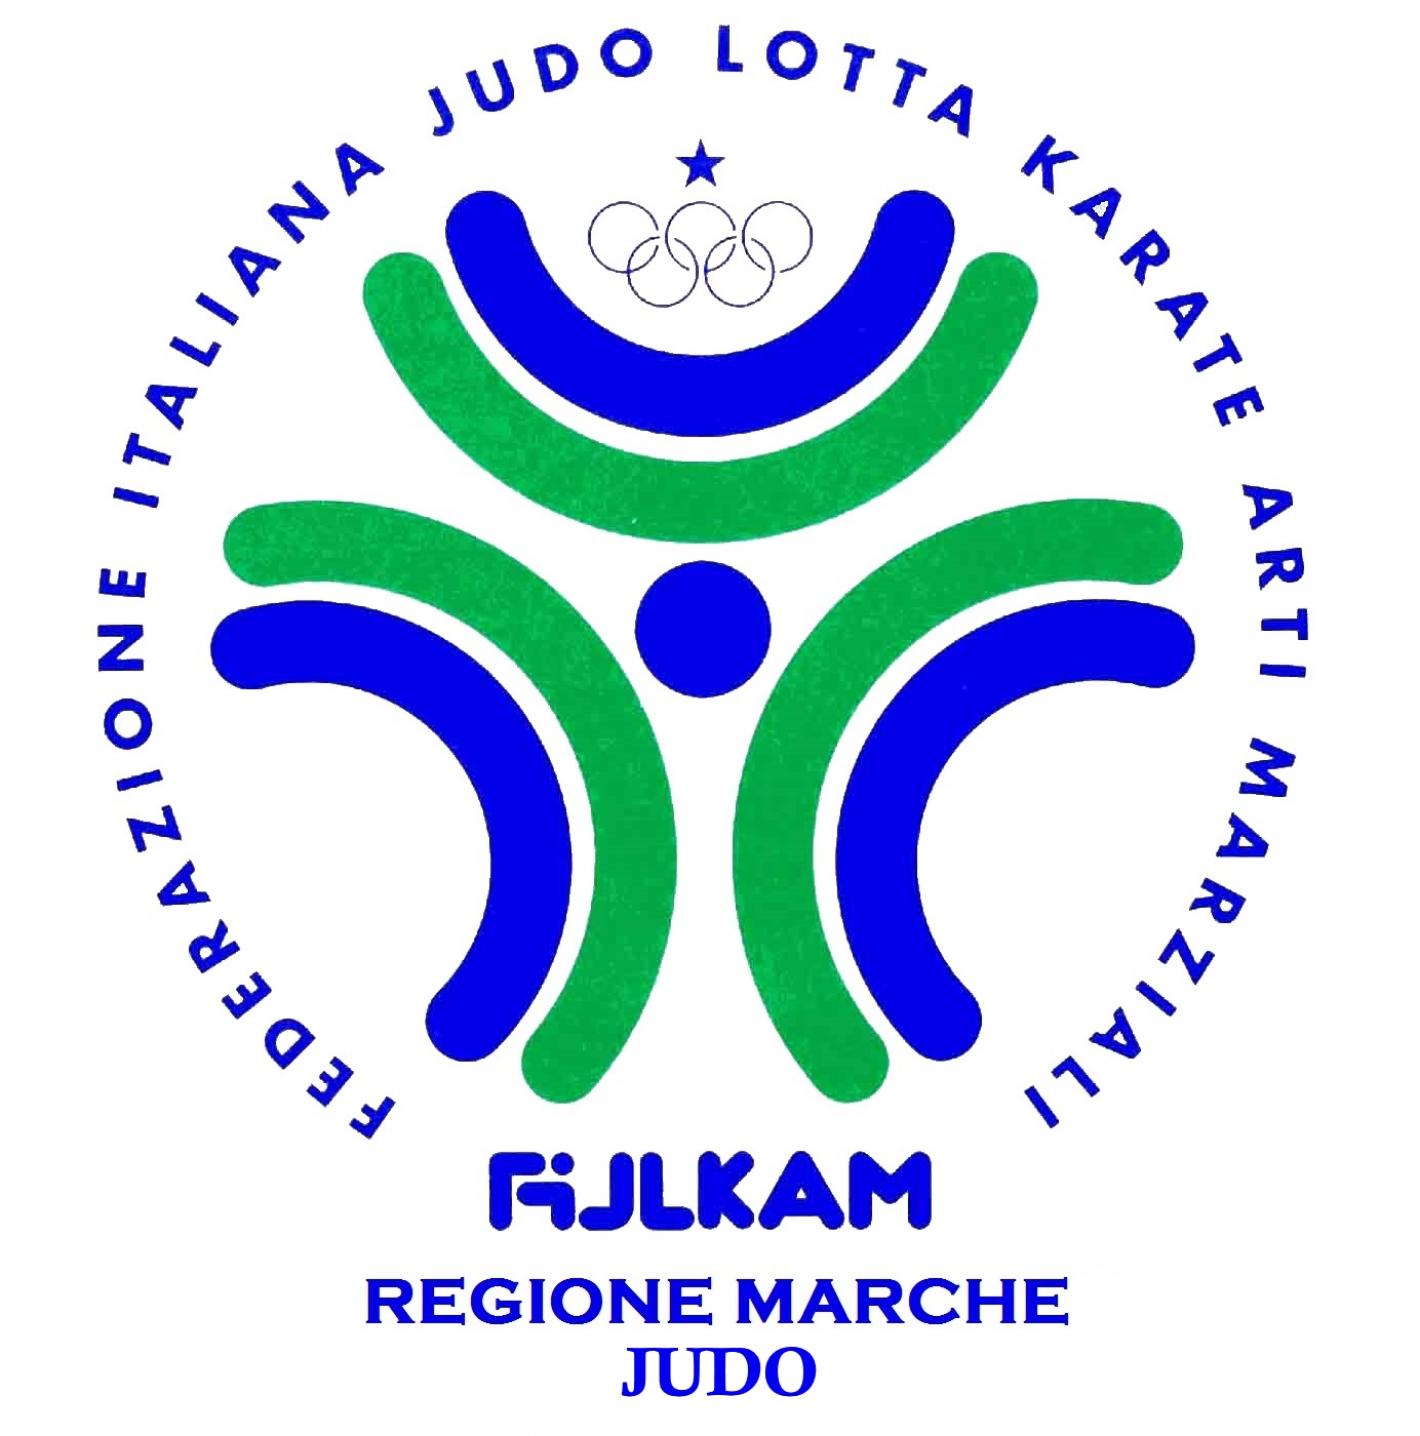 images/marche/Comitato/medium/logo_fijlkam_MARCHE_Judo.jpg